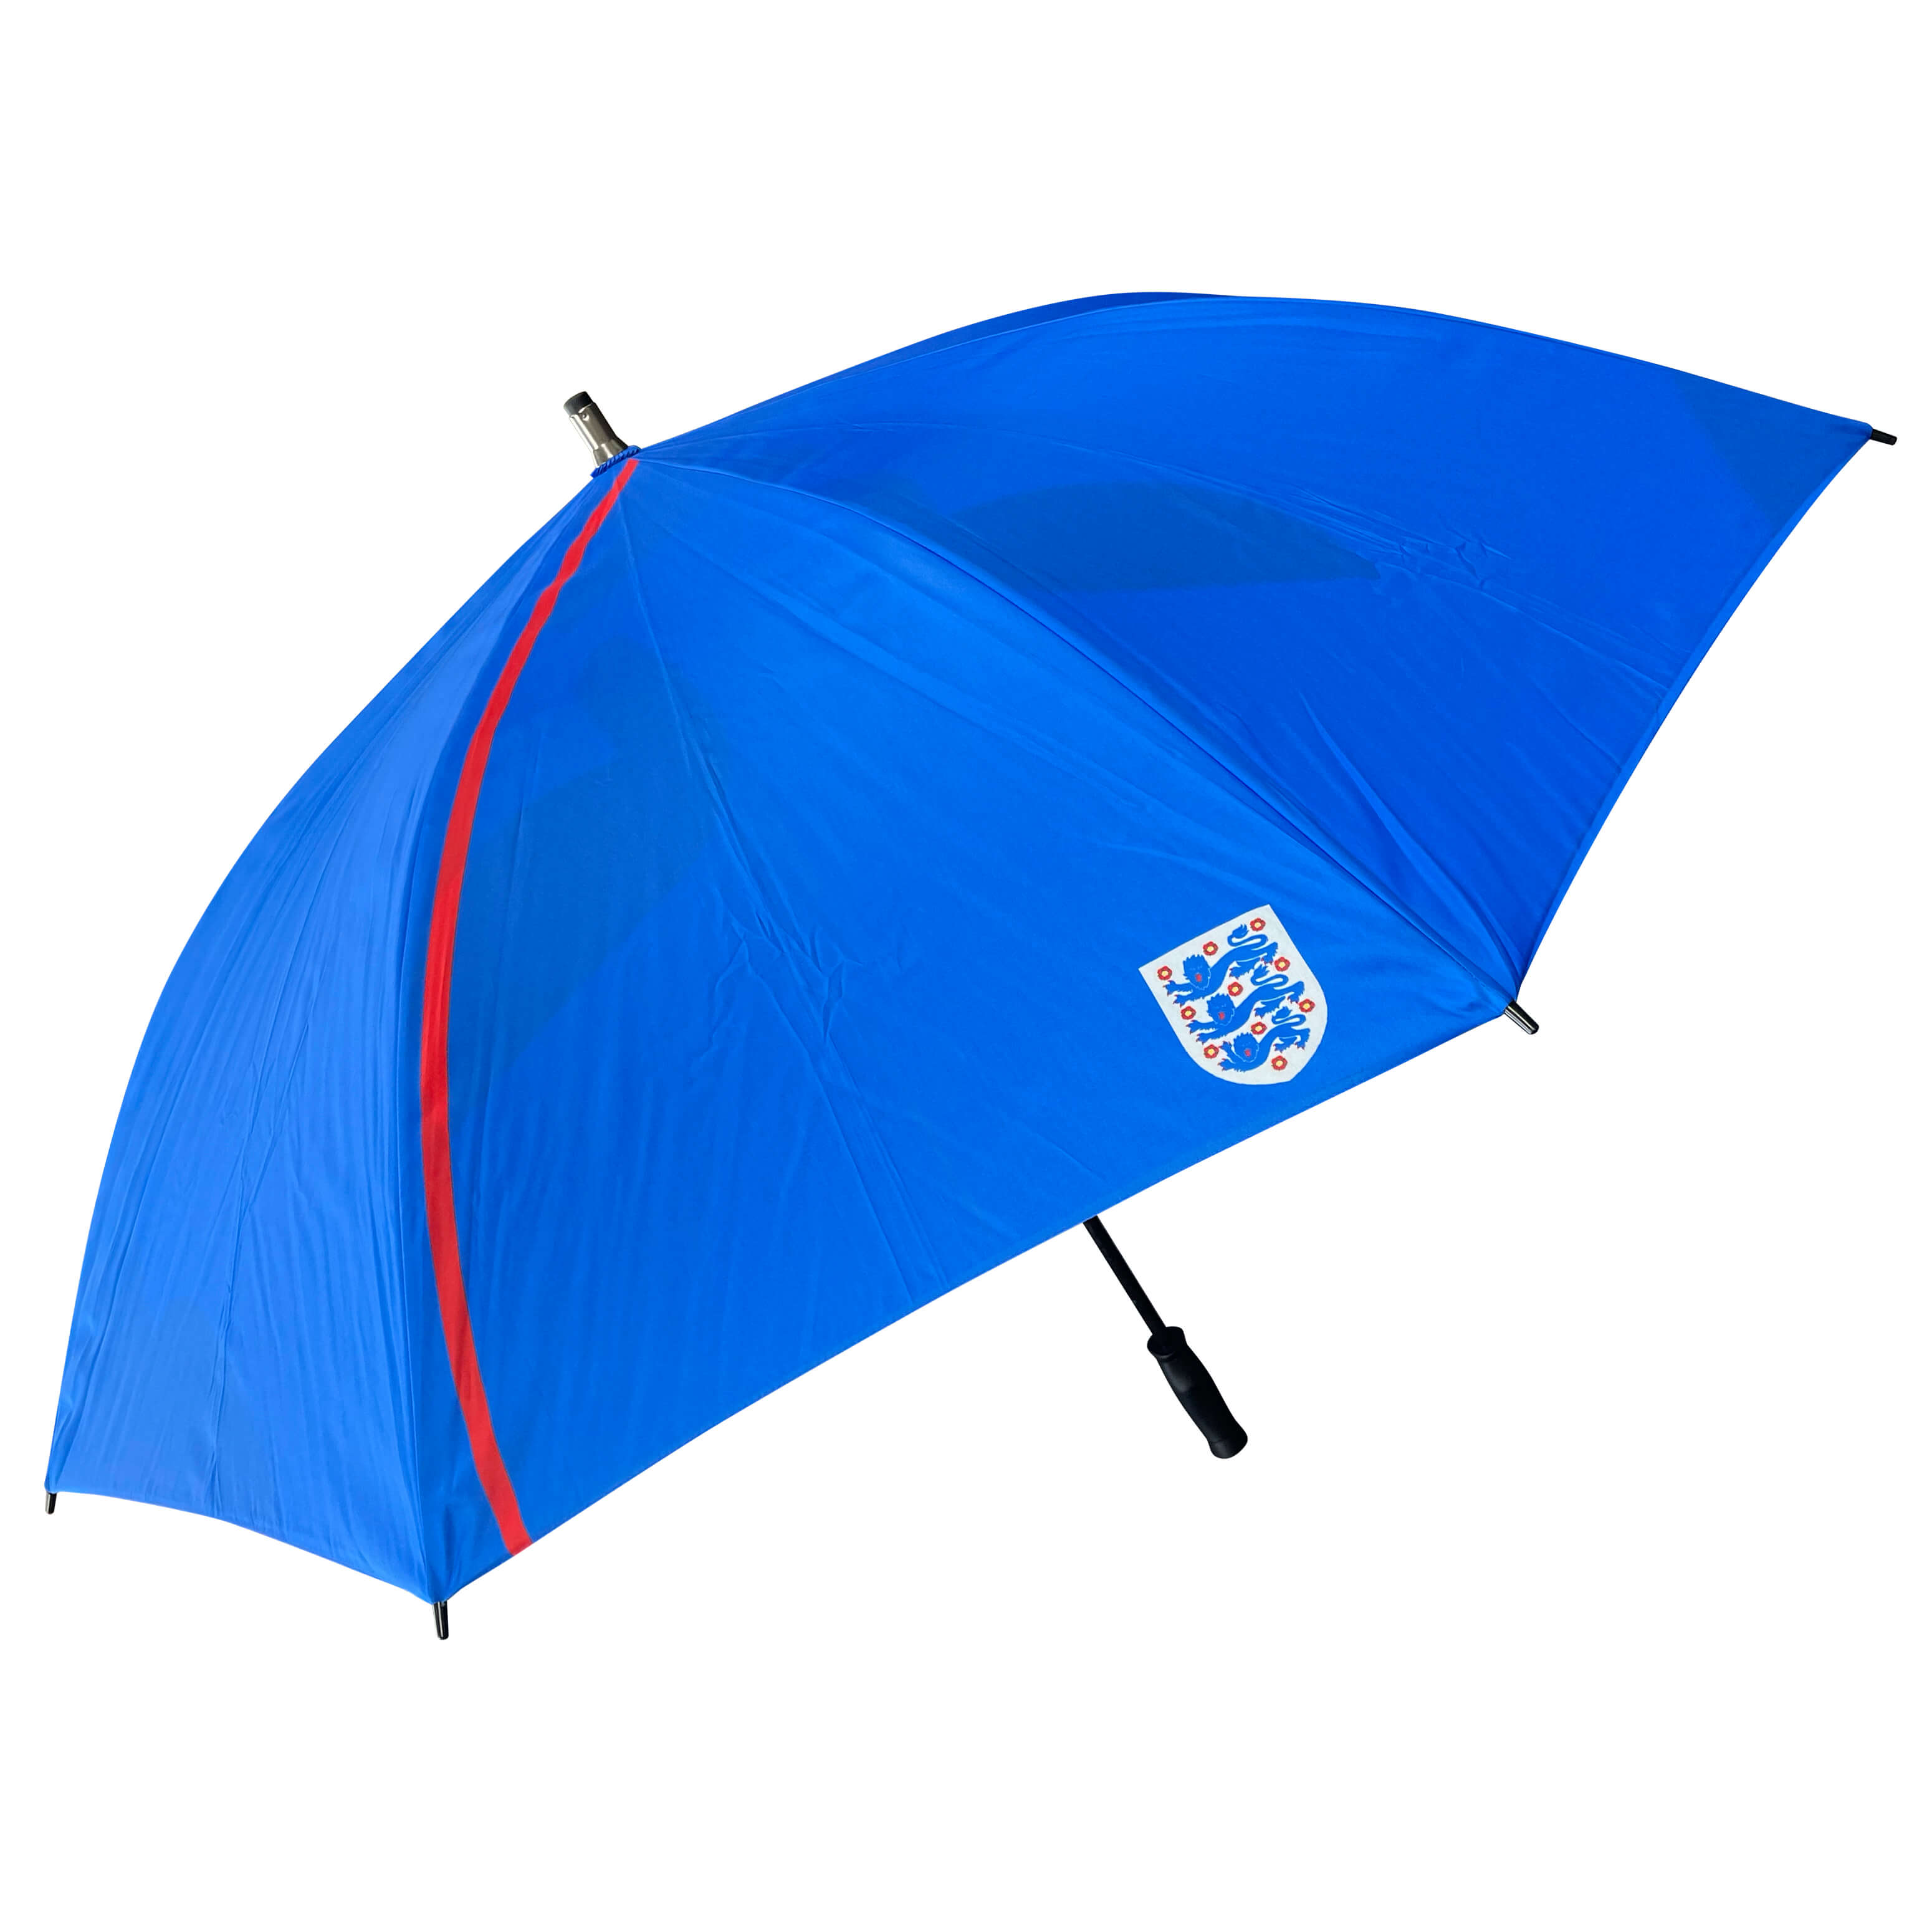 TaylorMade x England World Cup Golf Umbrella